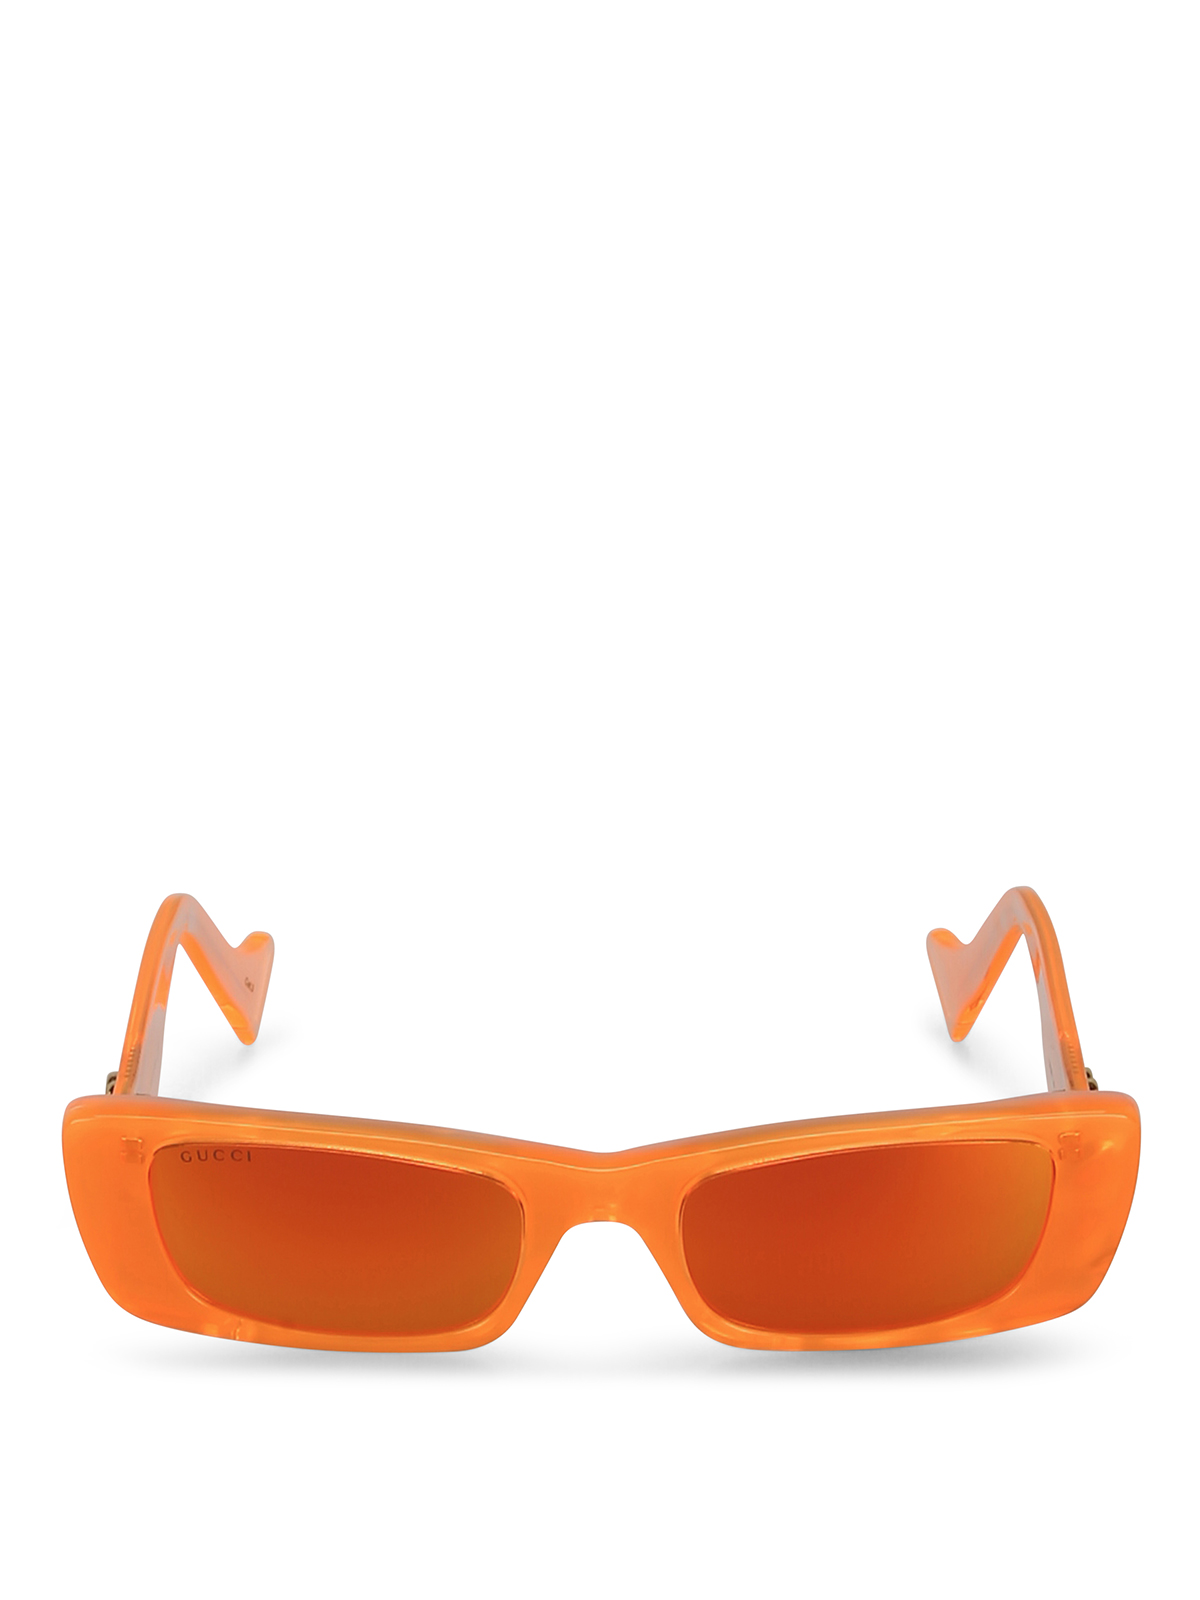 Heerlijk Groenland modder Sunglasses Gucci - Pearly orange sunglasses - GG0516S005 | iKRIX.com